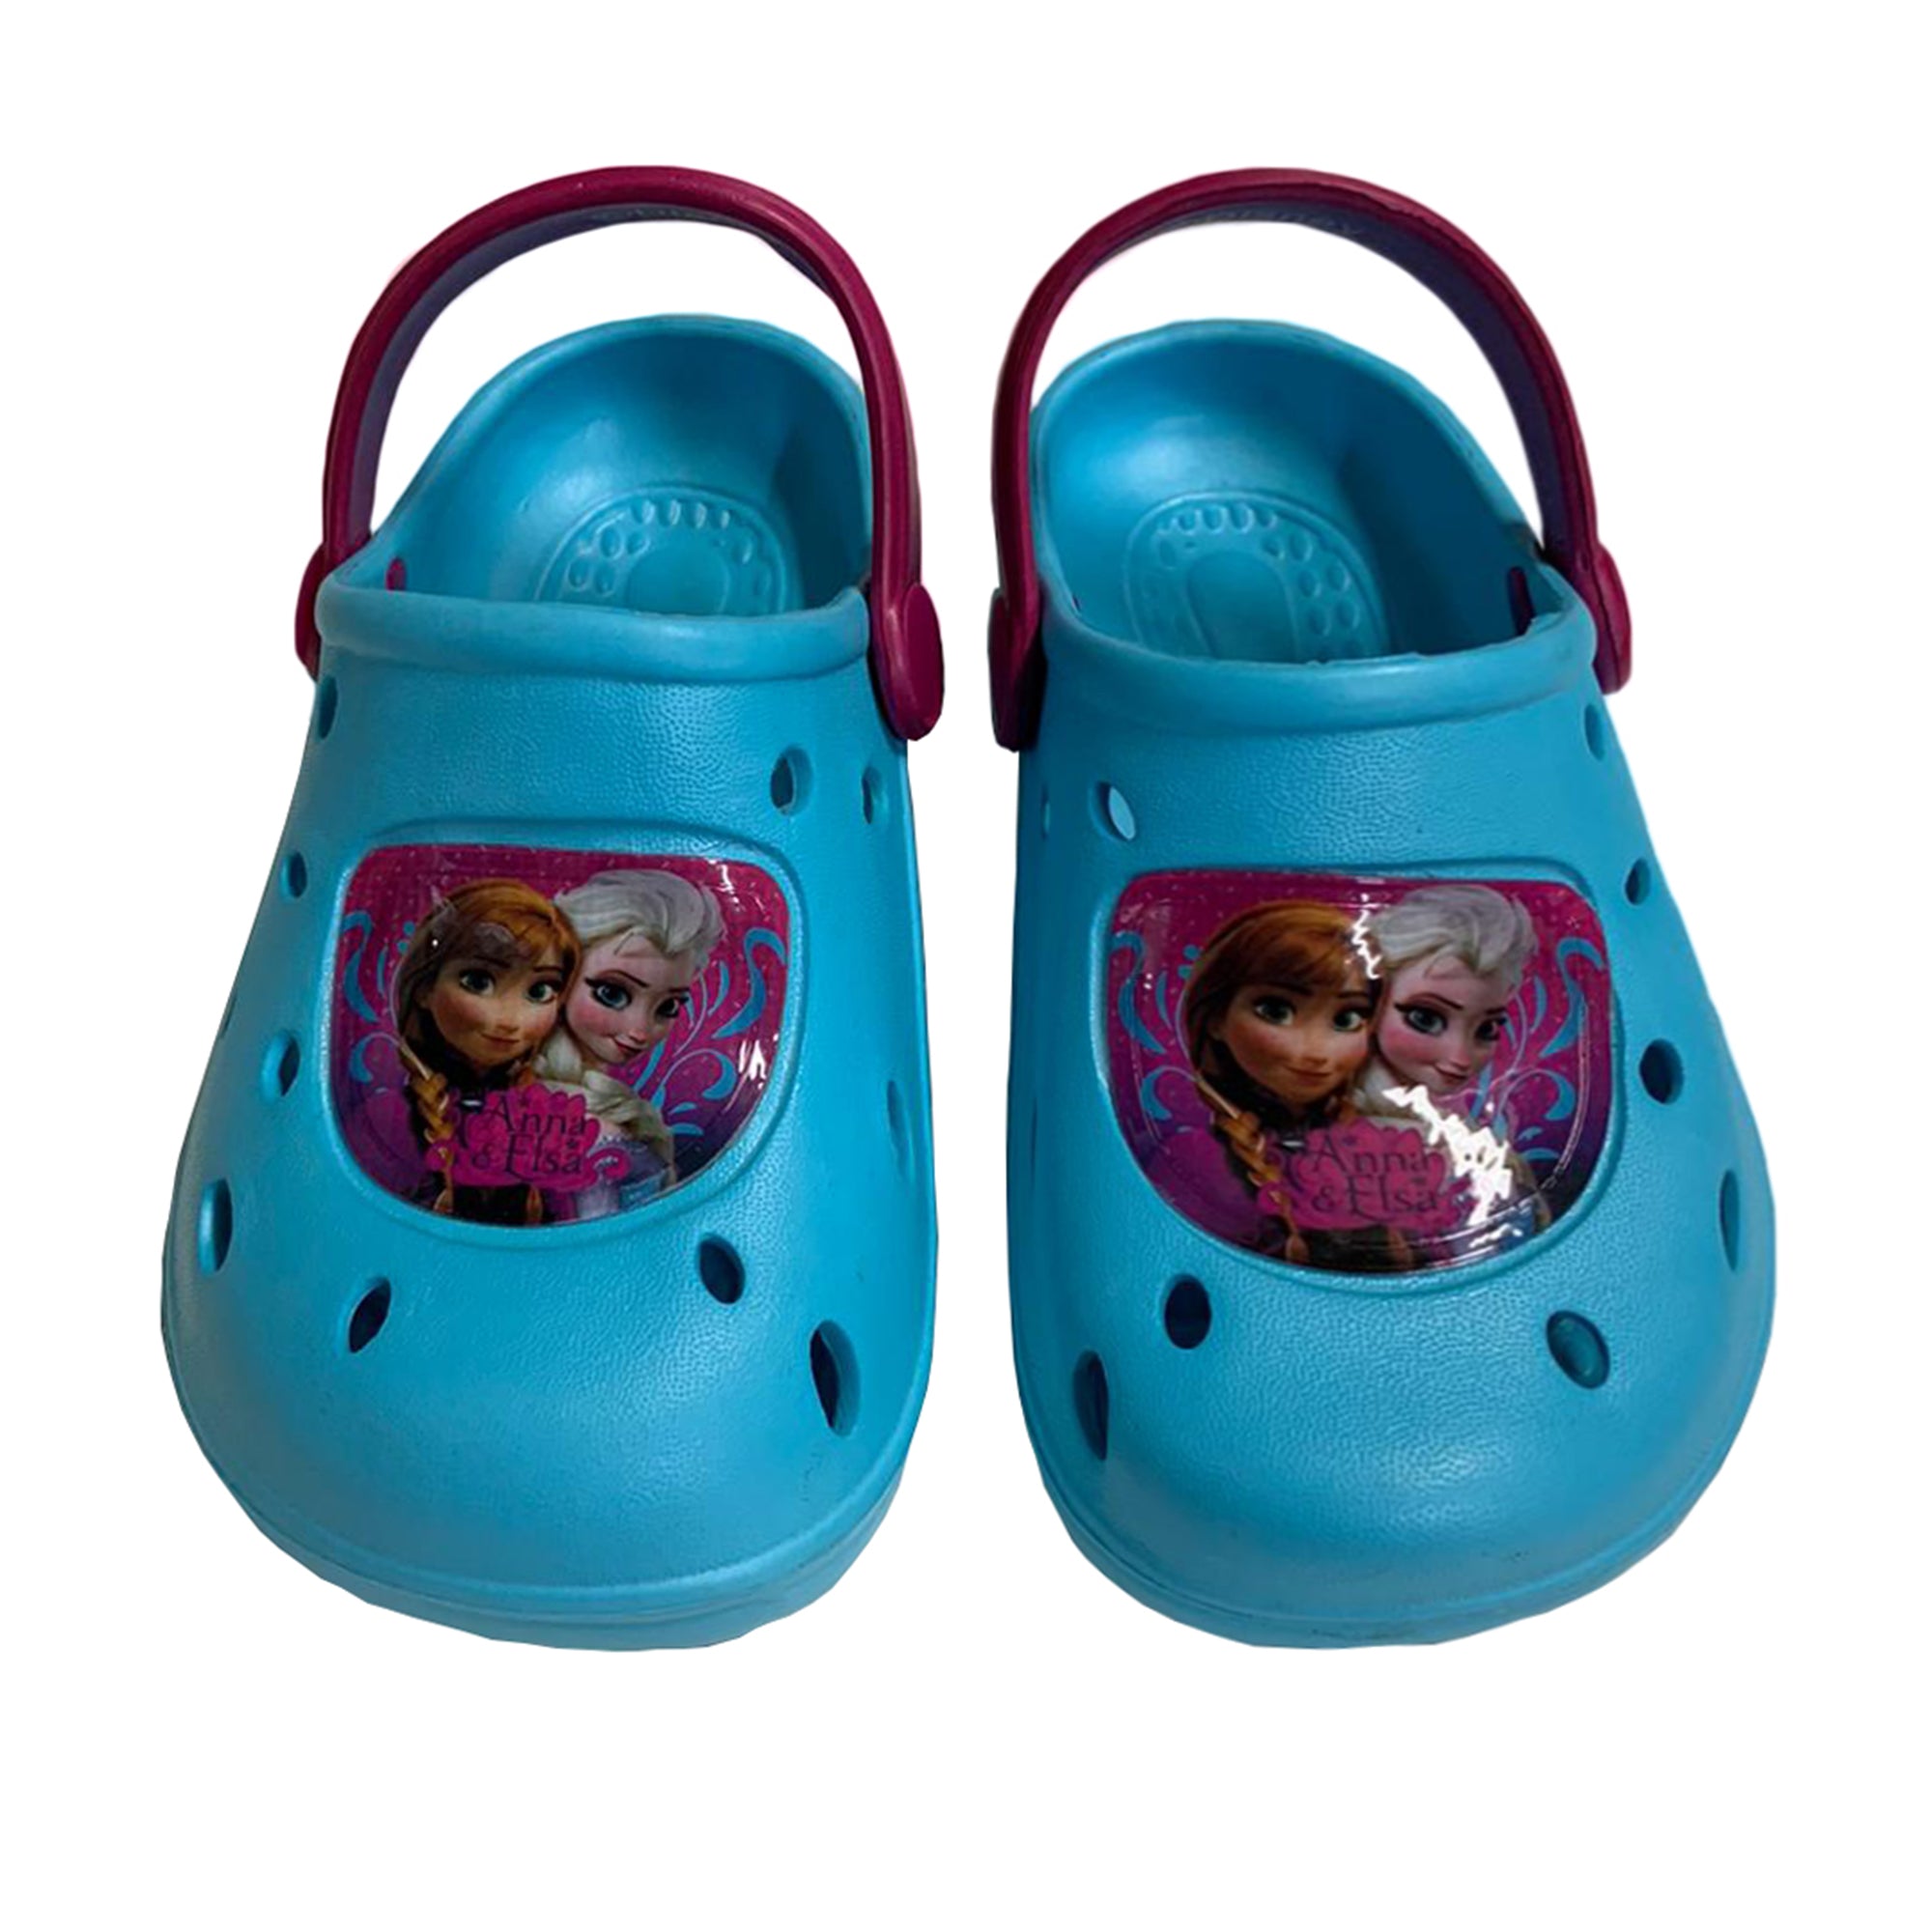 Pantofole Disney Frozen ciabatte per ragazza bambina zoccoli clog 2613